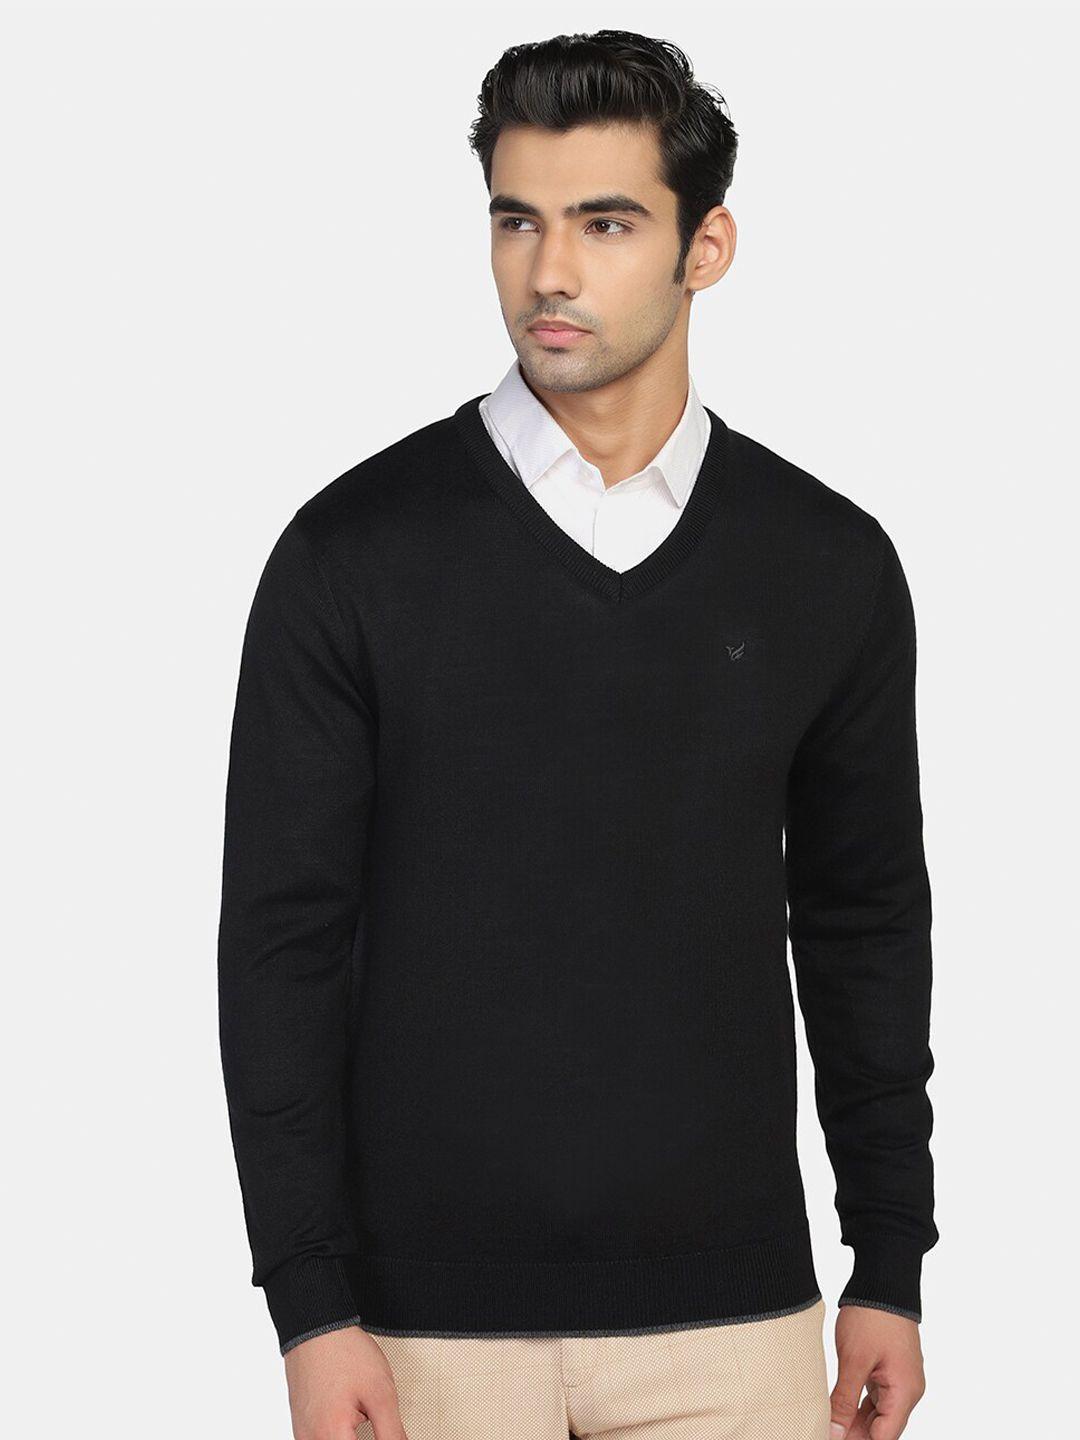 blackberrys-men-v-neck-pullover-acrylic-sweater